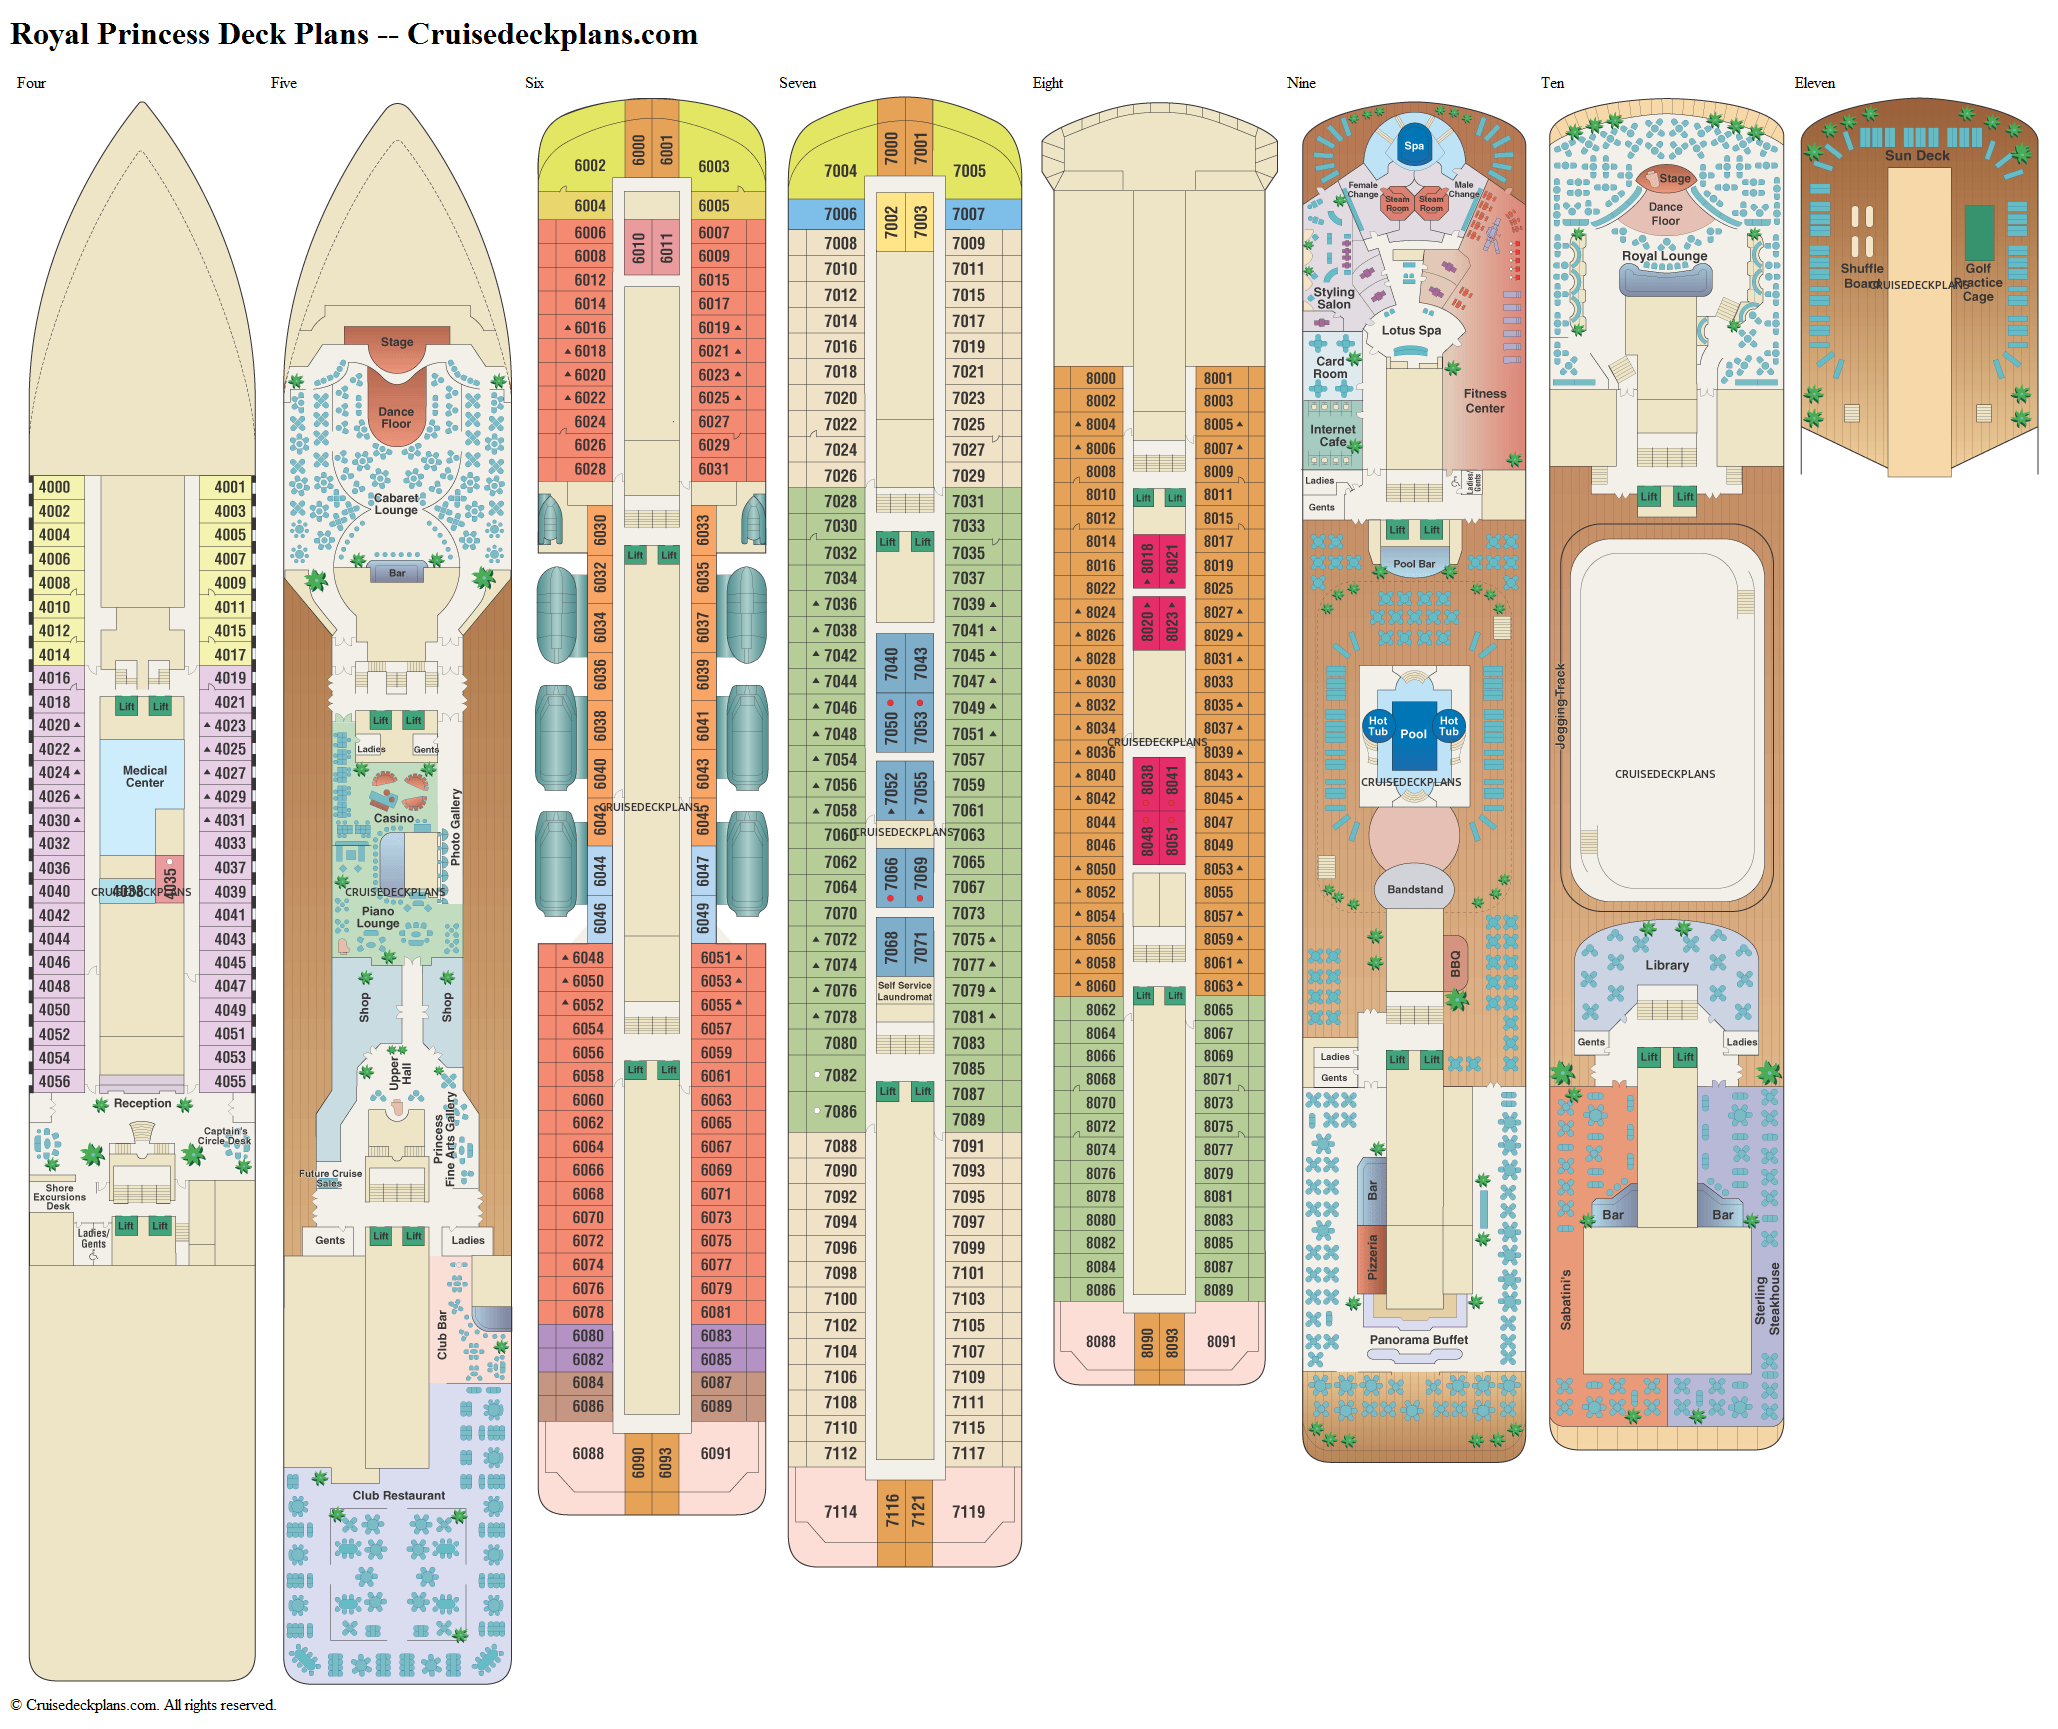 Star Princess Printable Deck Plans - Free Printable Download